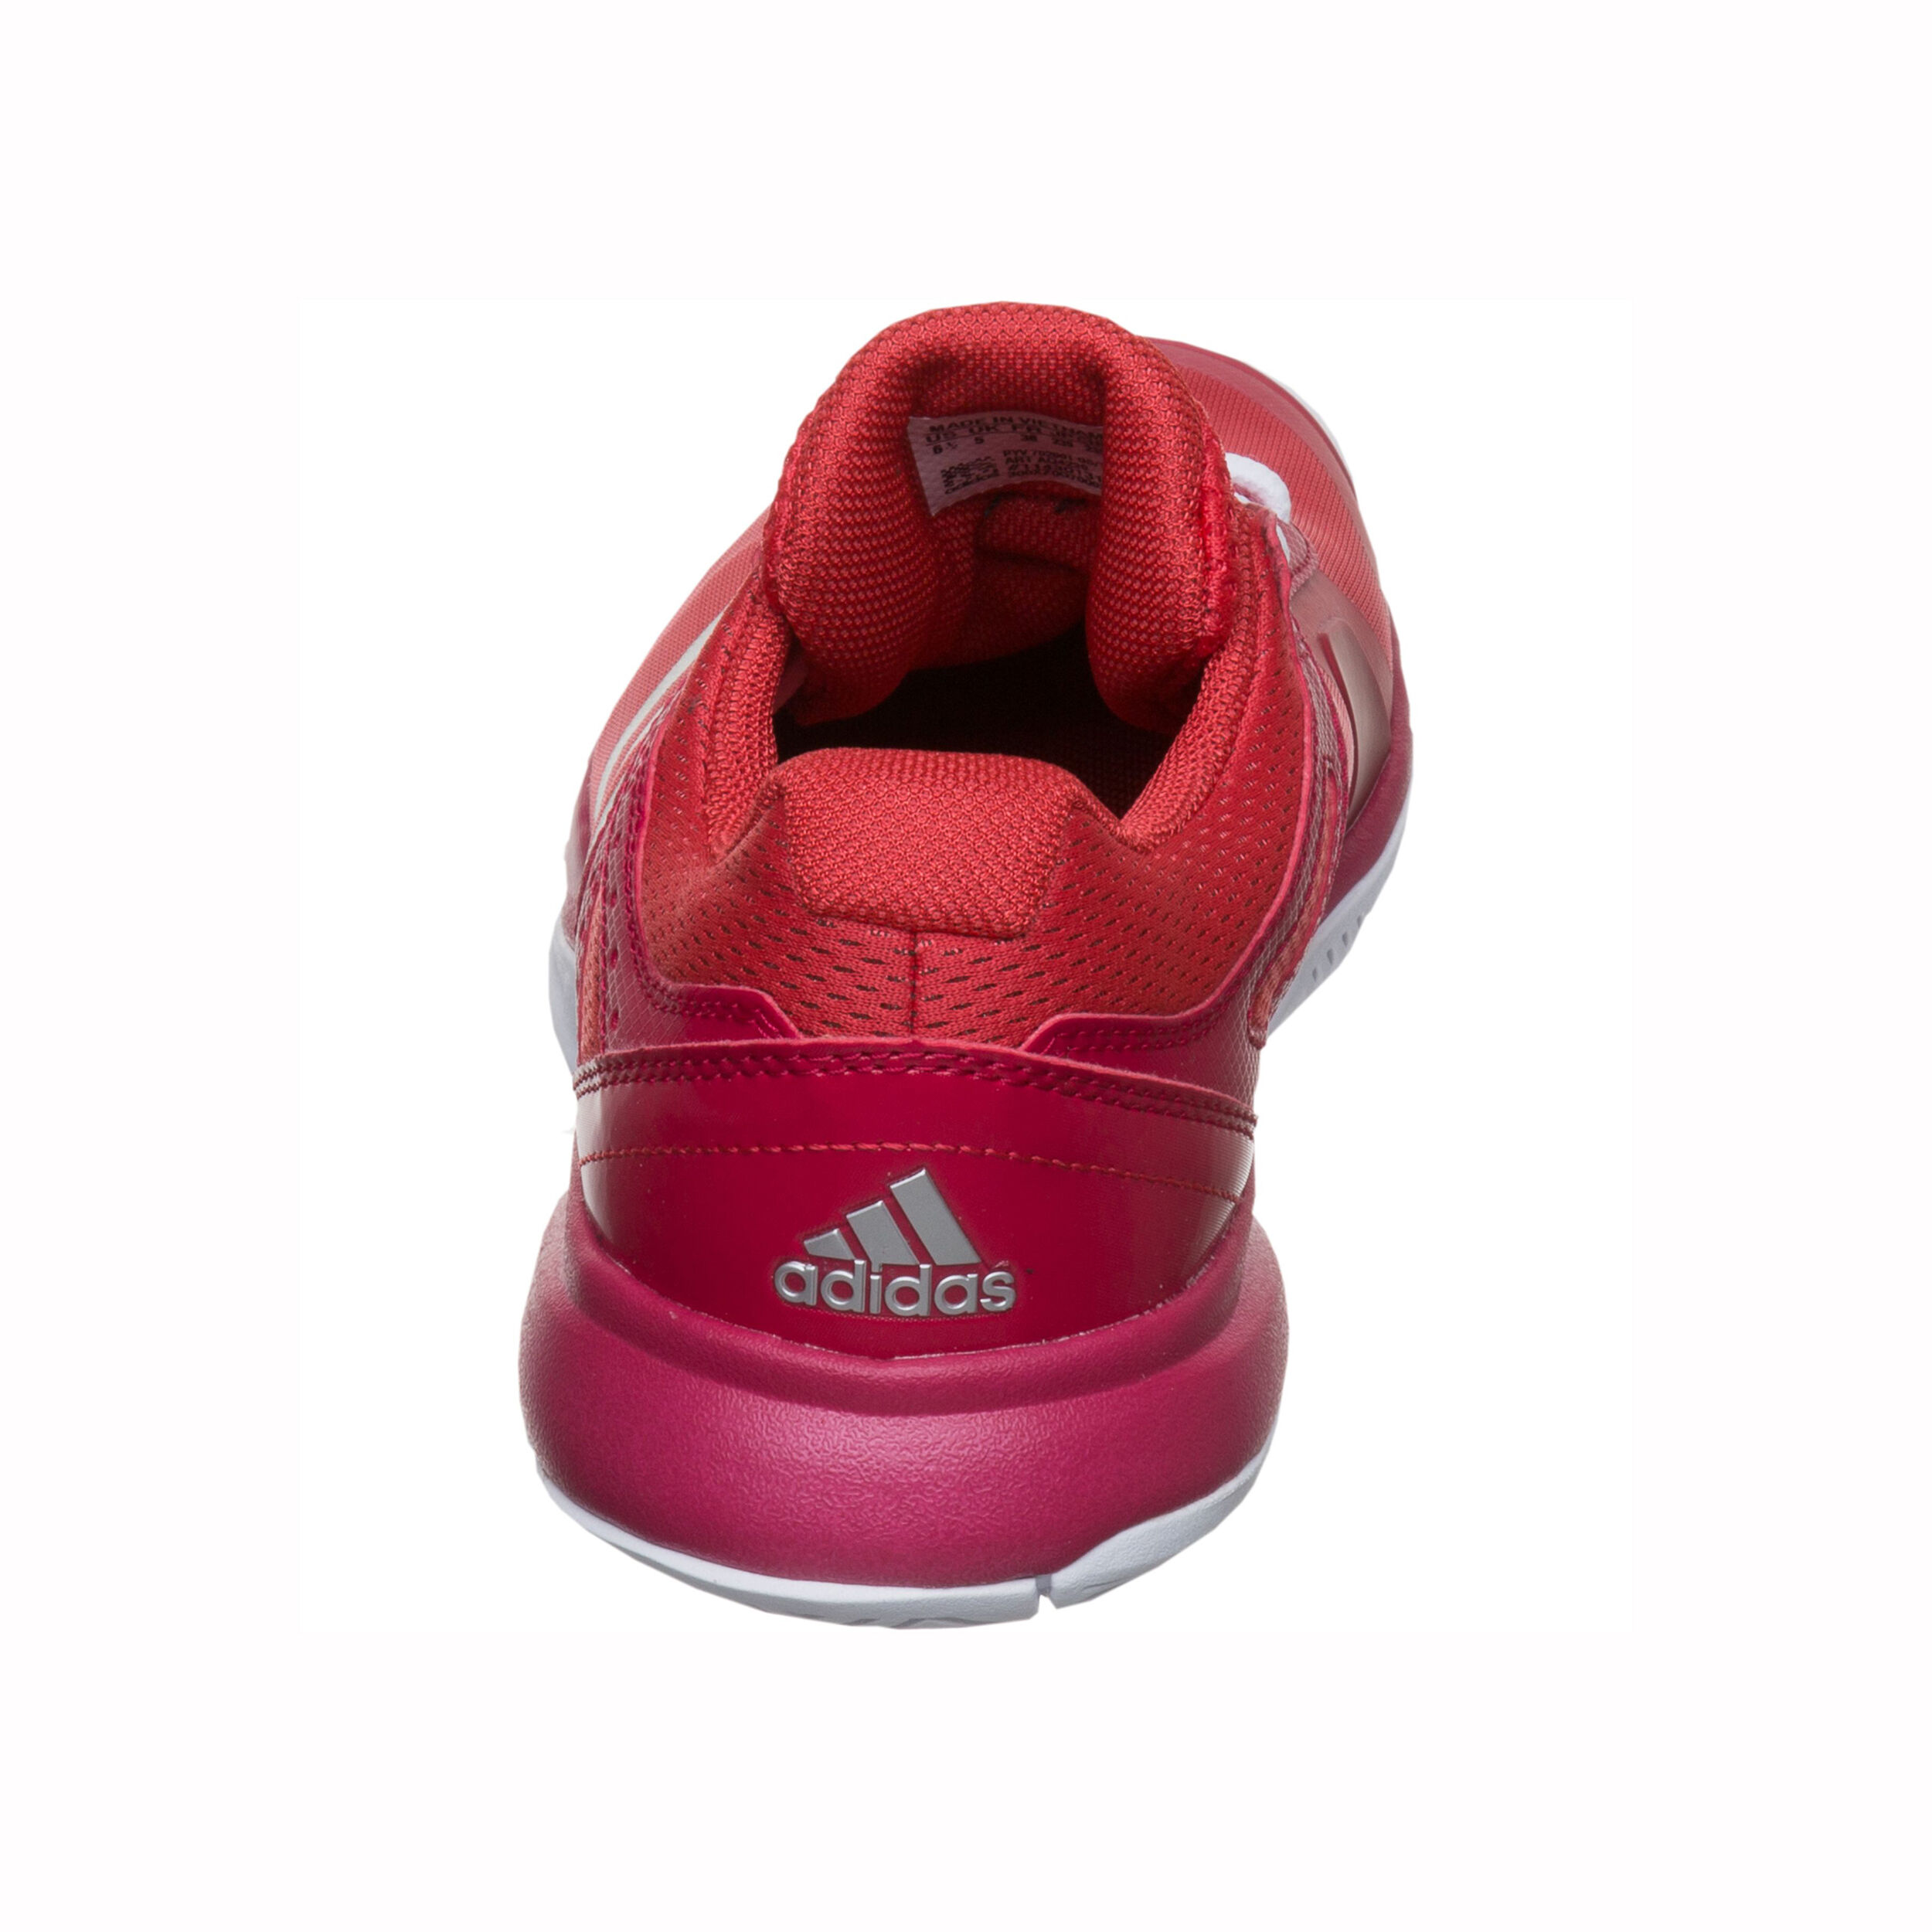 buy adidas Adizero Court All Court Shoe Women - Red, Silver online ... فم صغير